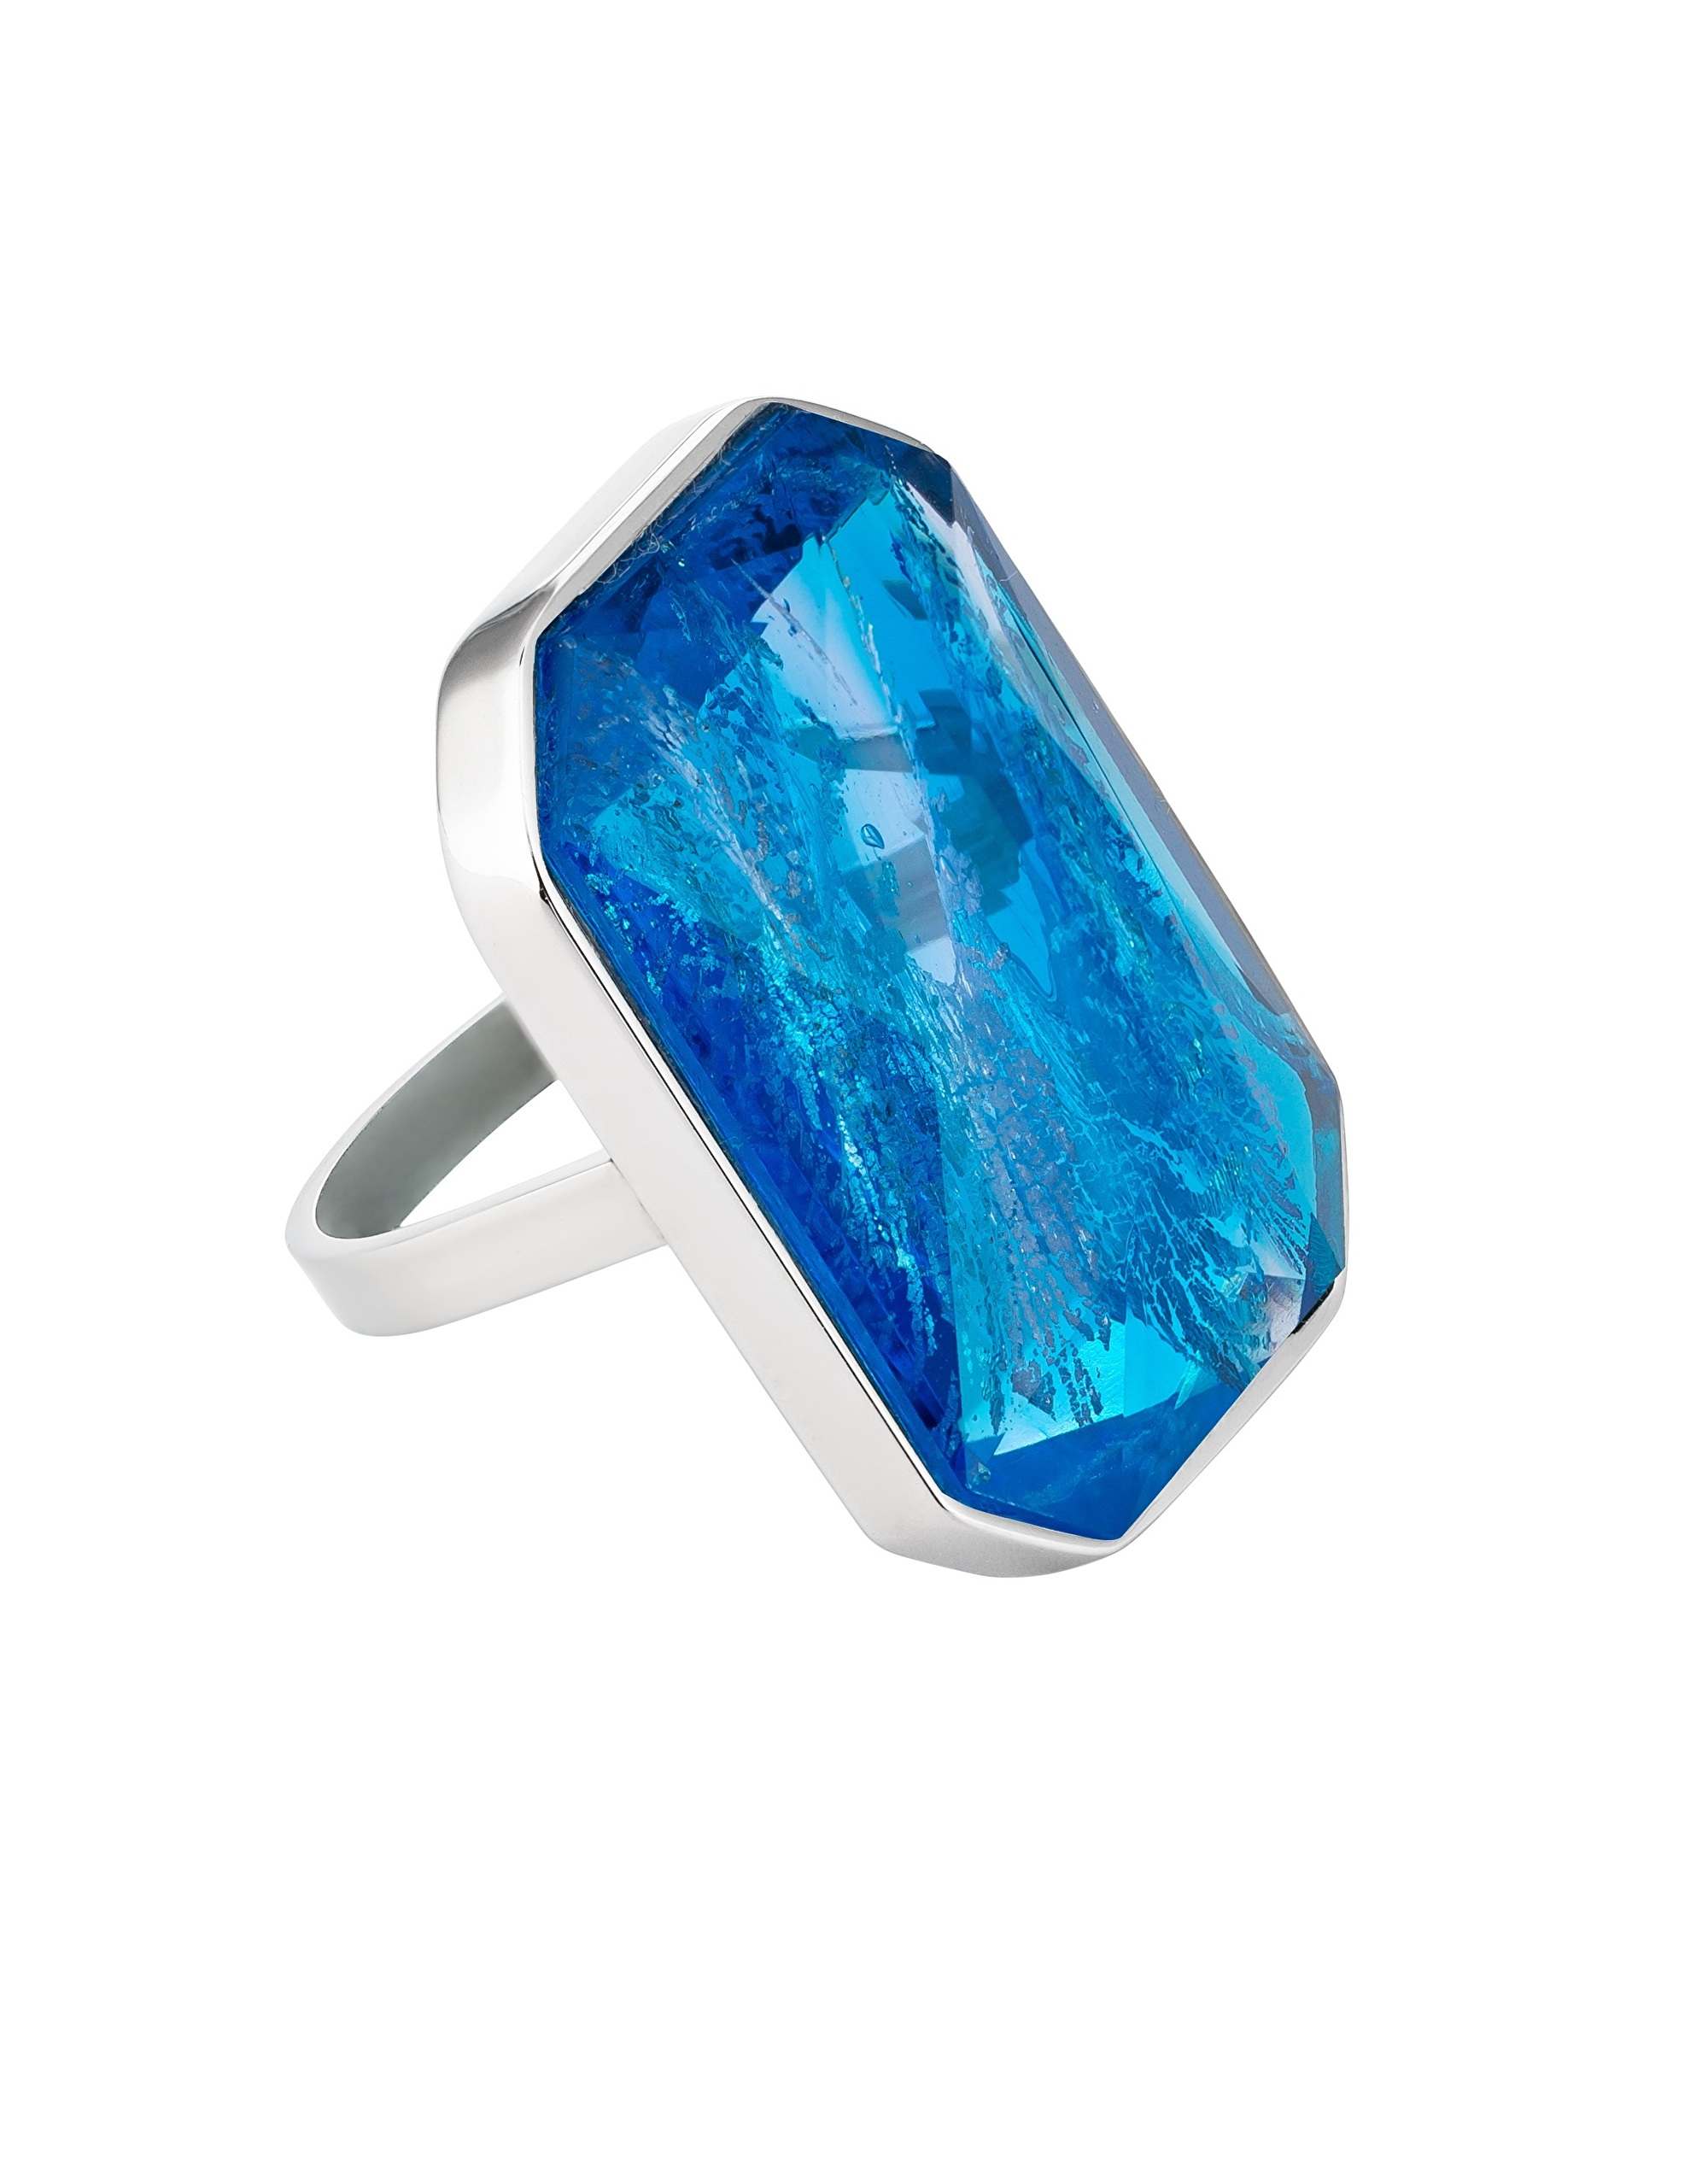 Preciosa Luxusní ocelový prsten s ručně mačkaným kamenem českého křišťálu Preciosa Ocean Aqua 7446 67 53 mm